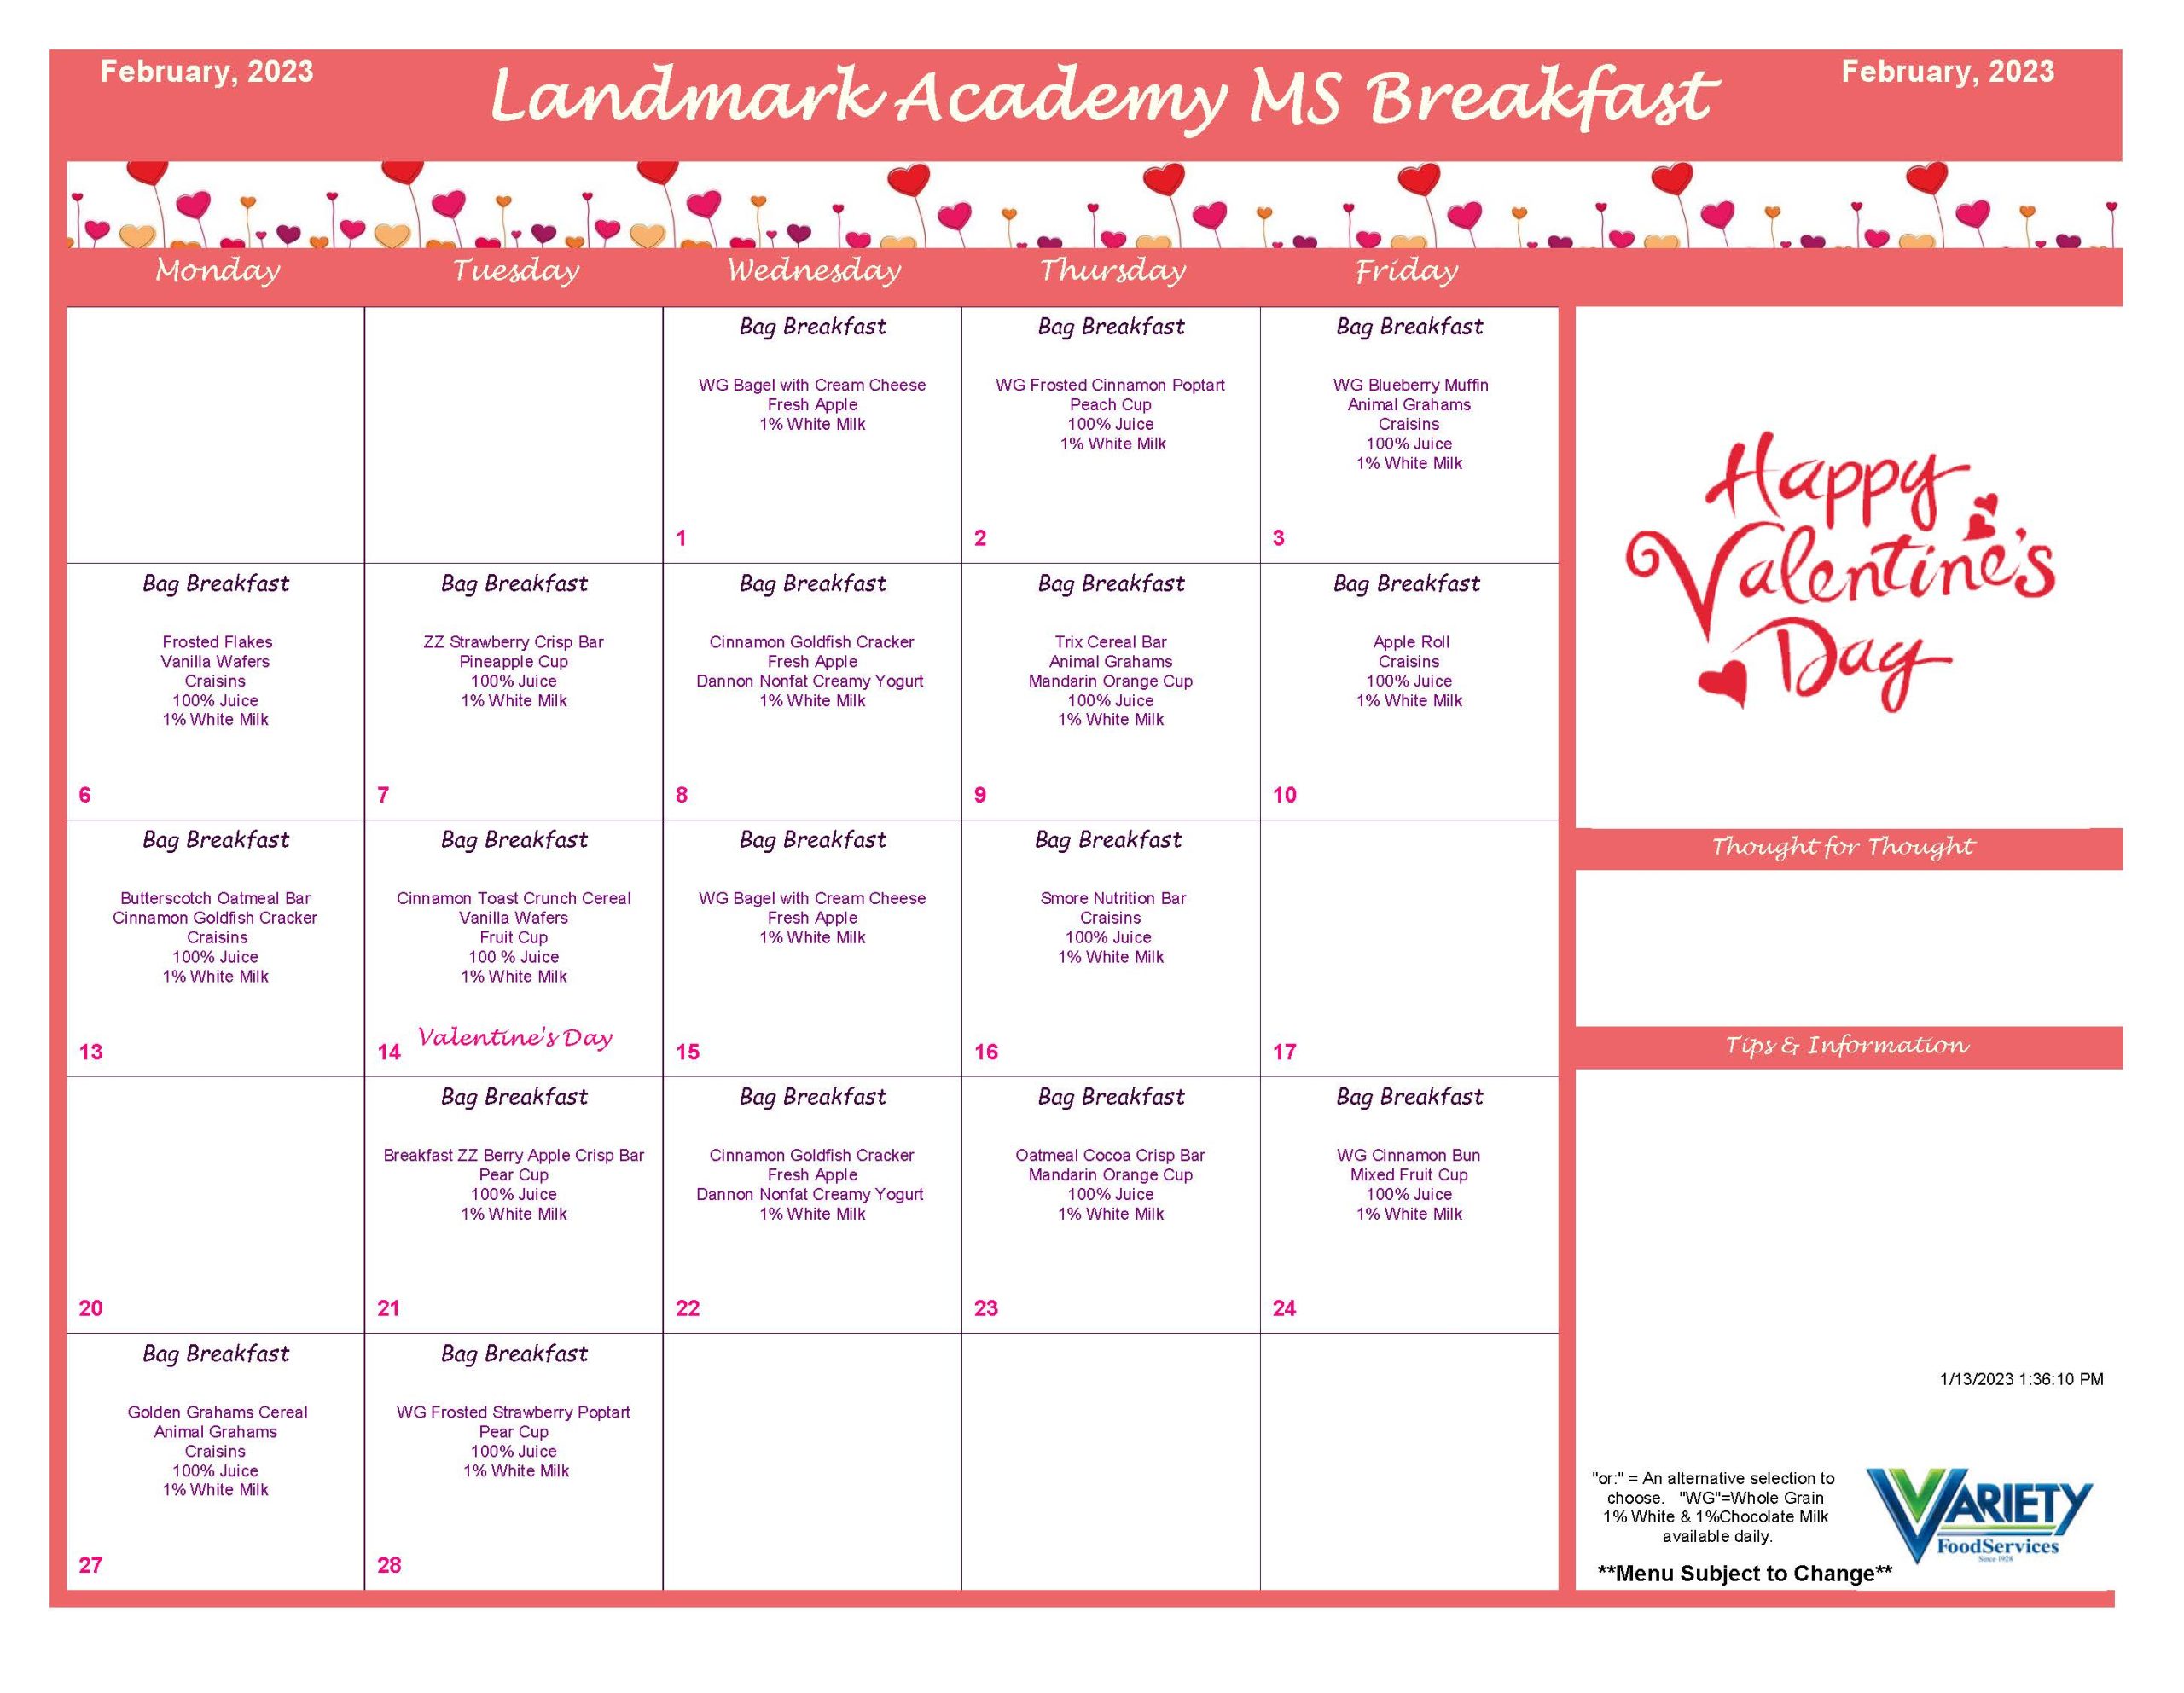 Landmark Academy February Breakfast